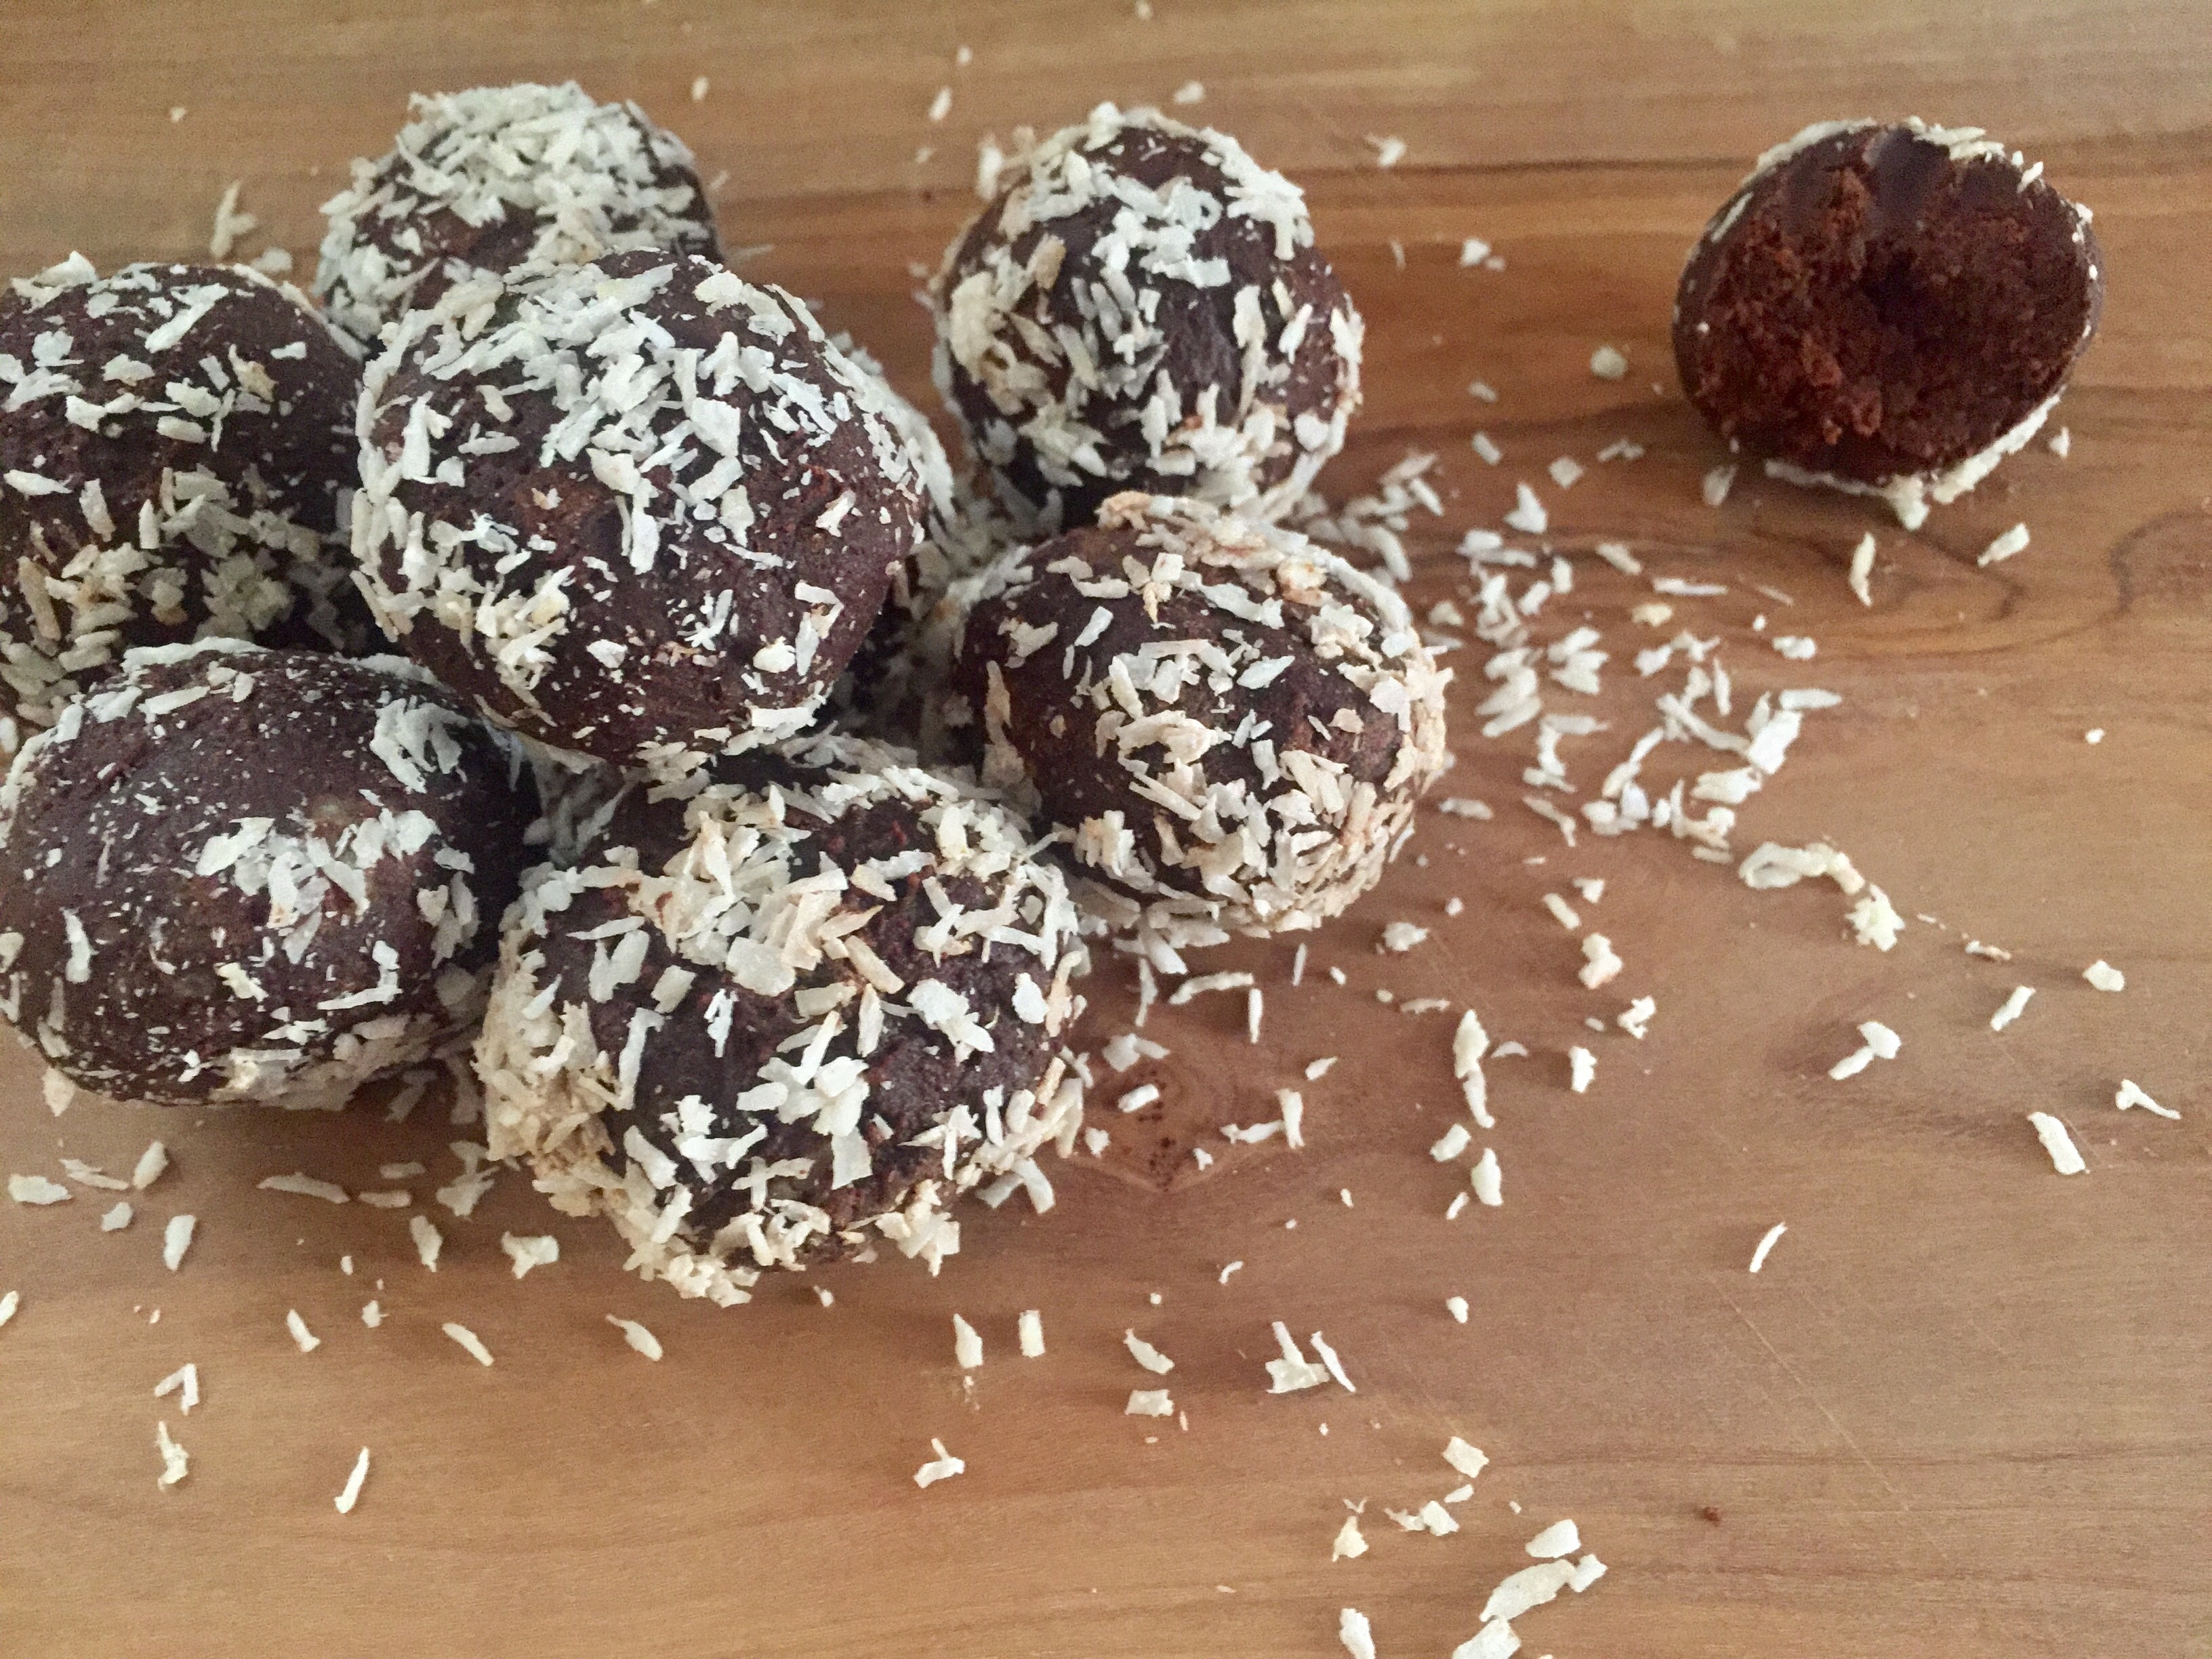 healthy chocolate avocado truffles - healthy snack - healthy dessert - avocado - truffles - recipe